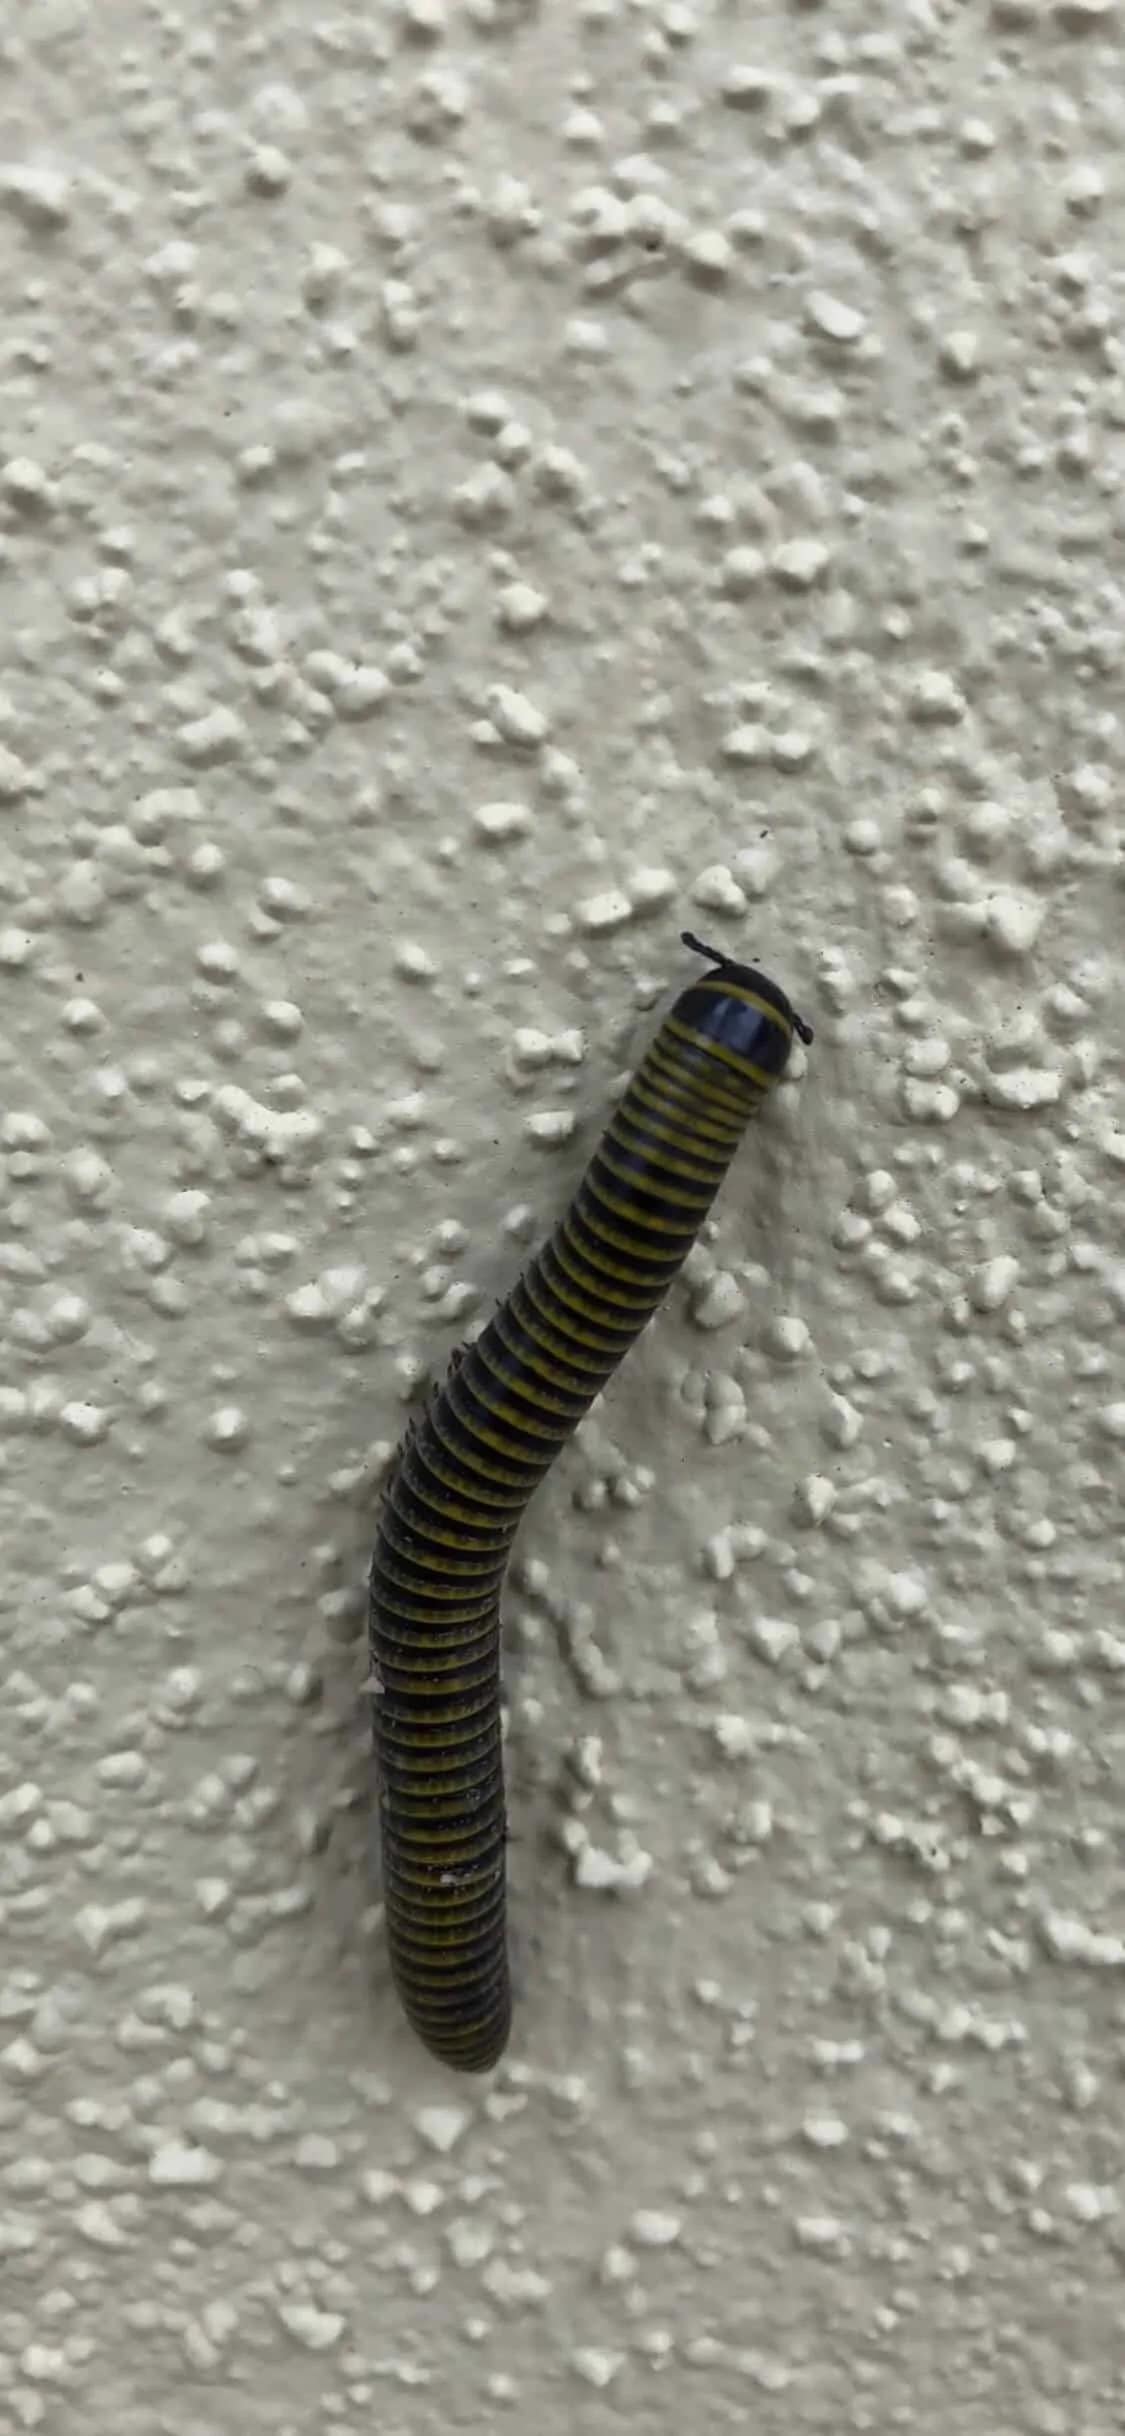 Close view of a millipede climbing an exterior wall